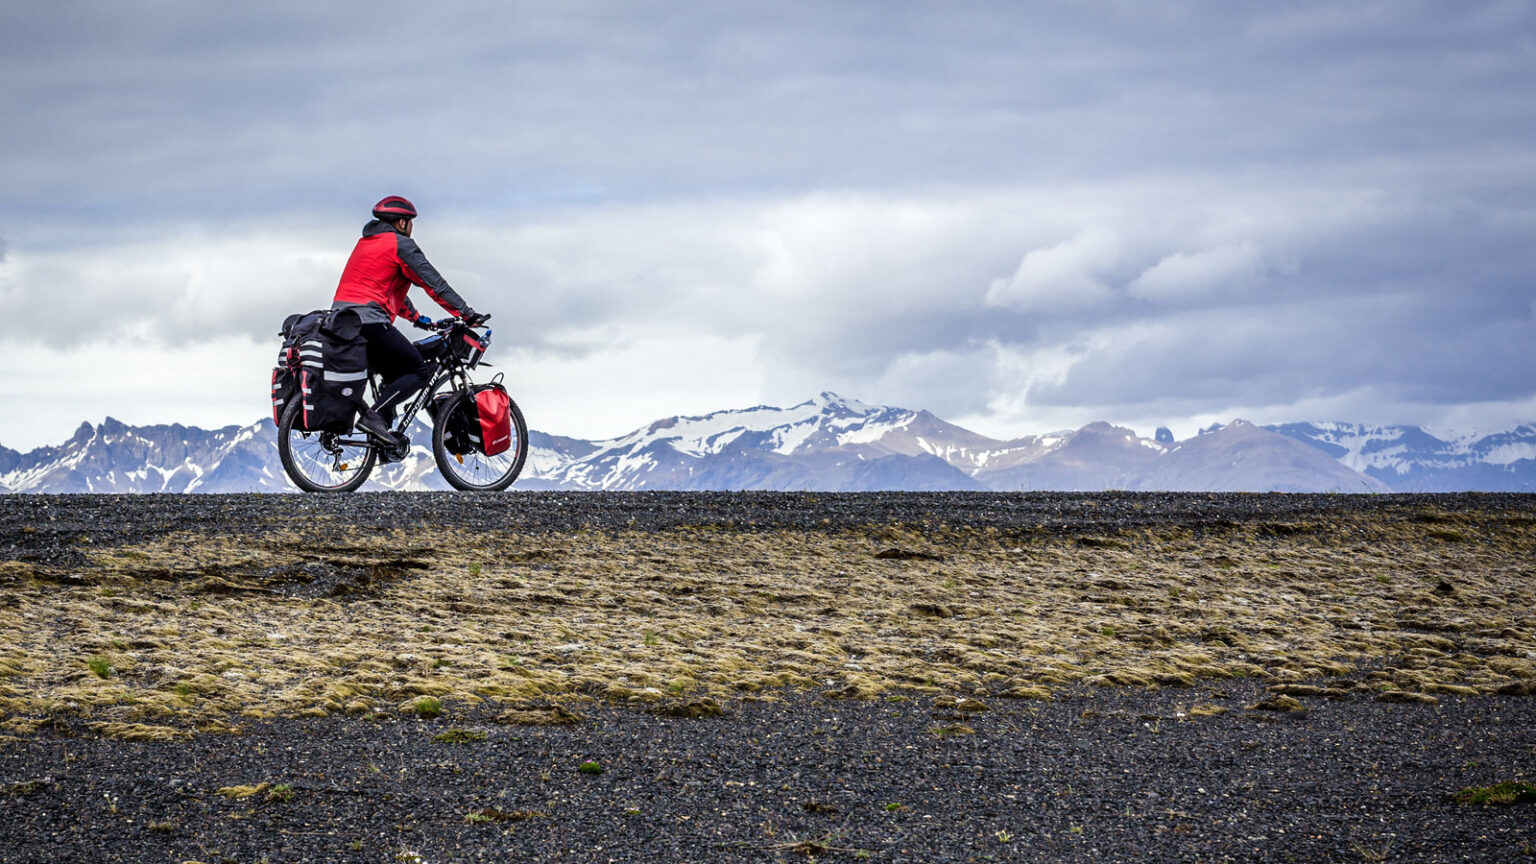 A group of bikepackers navigating rugged terrain during an advanced bikepacking adventure.